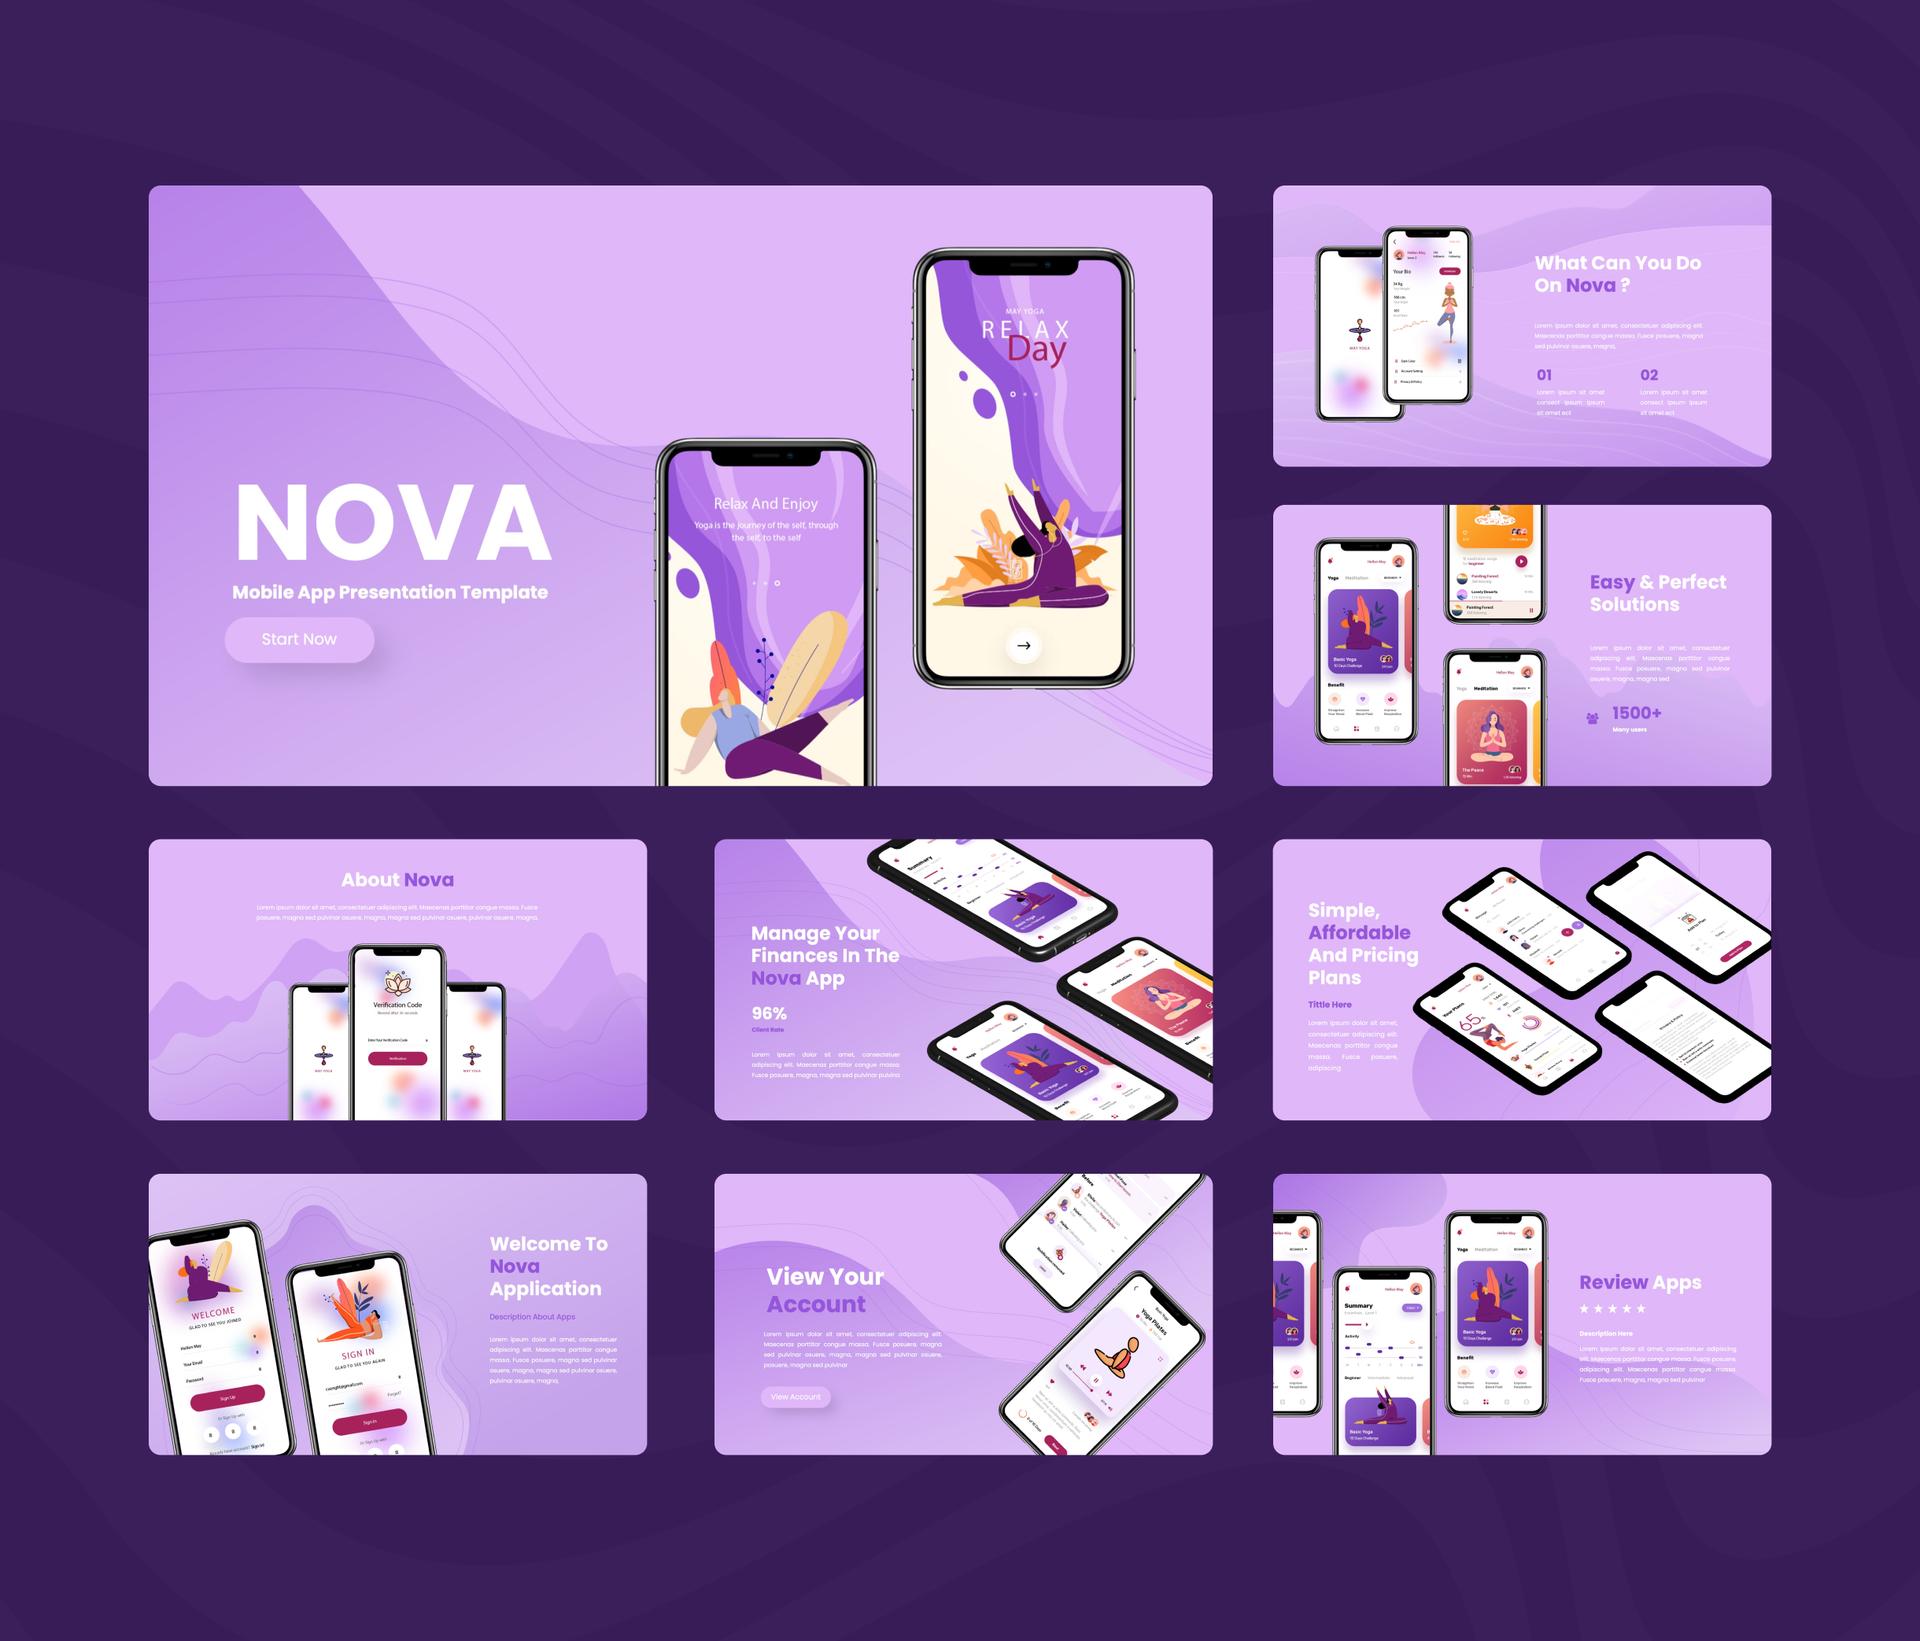 NOVA - Mobile App Presentation Template.